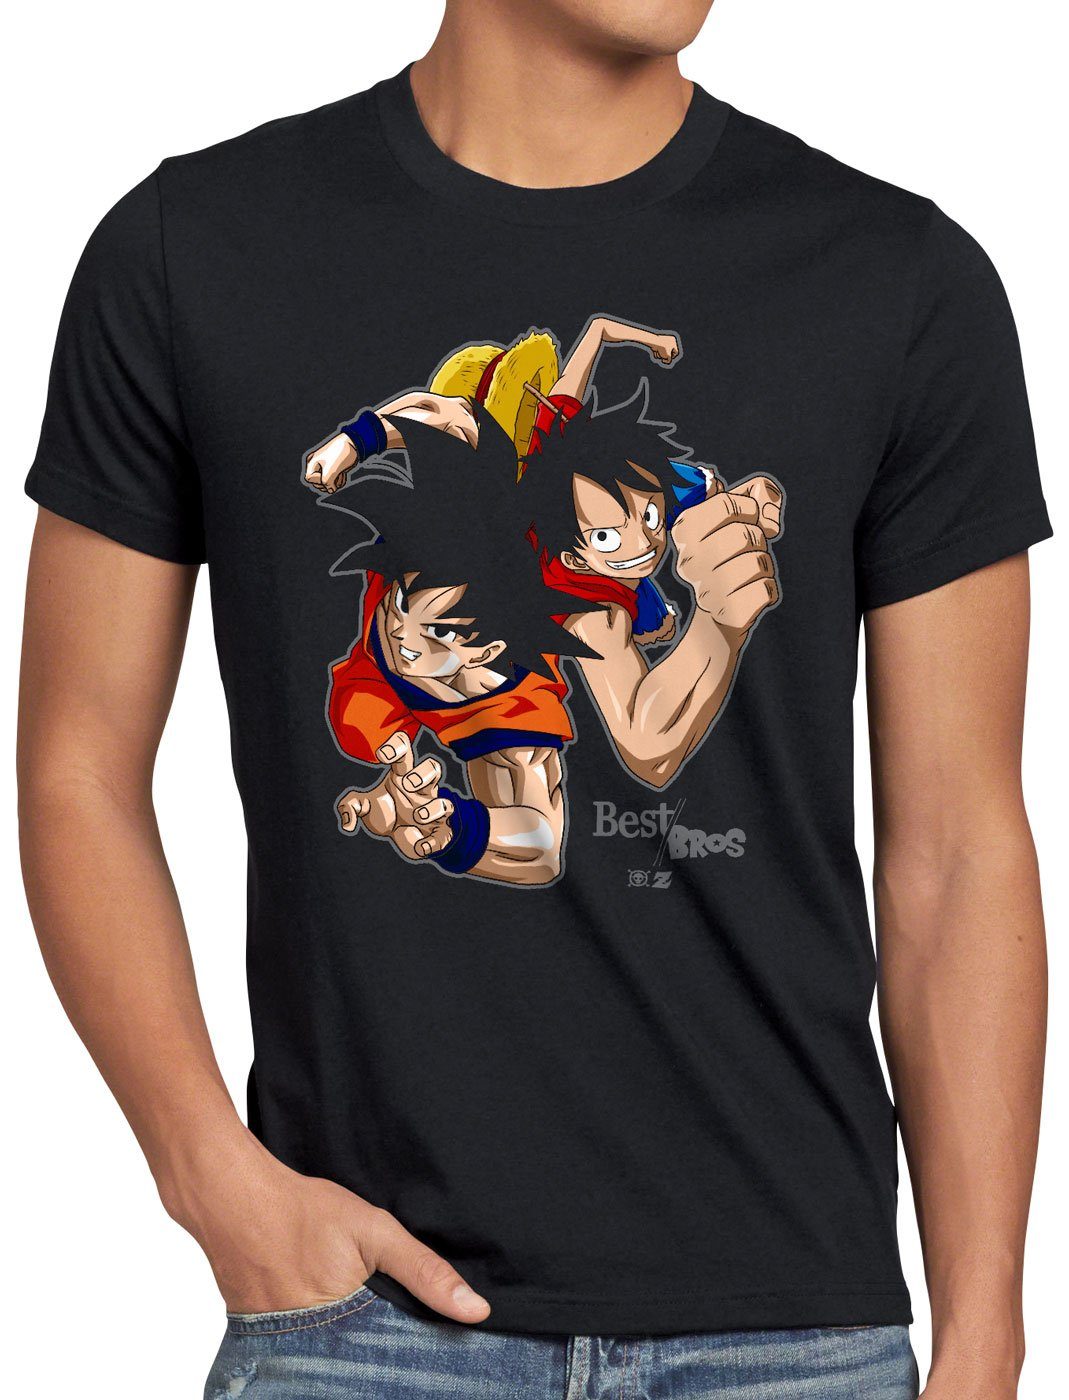 Print-Shirt Goku strohhut Ruffy saiyan z T-Shirt - Best Bro's Herren style3 schwarz